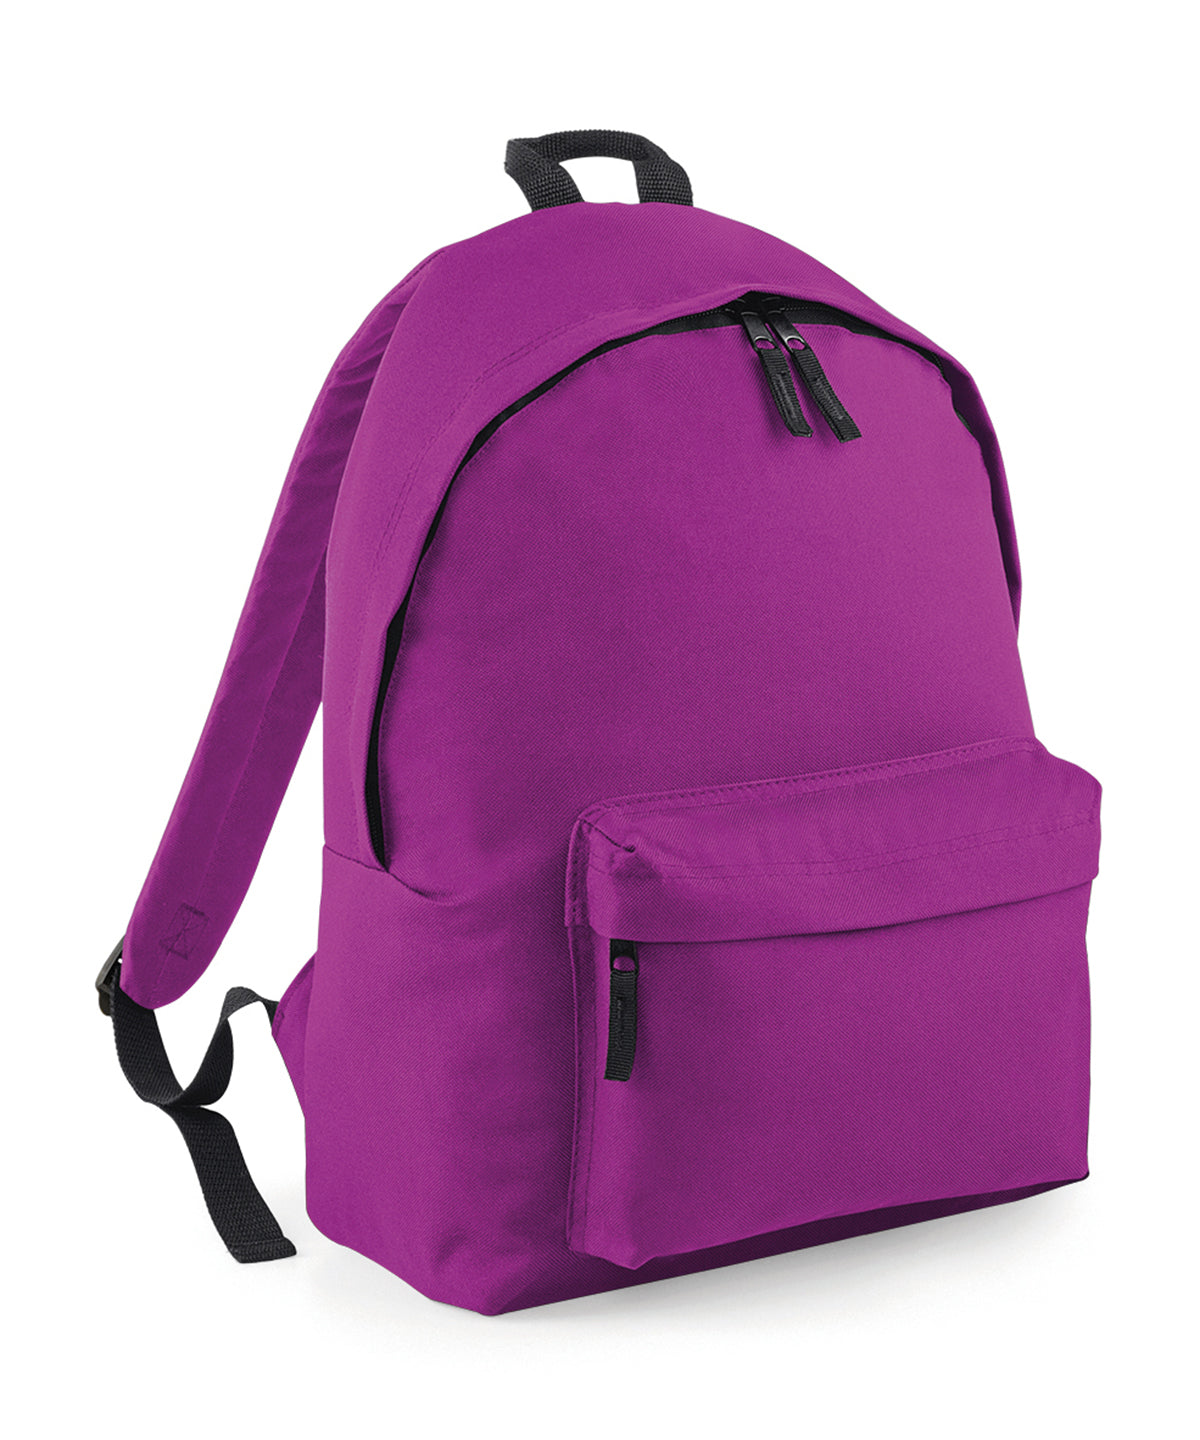 Personalised Bags - Mid Purple Bagbase Original fashion backpack